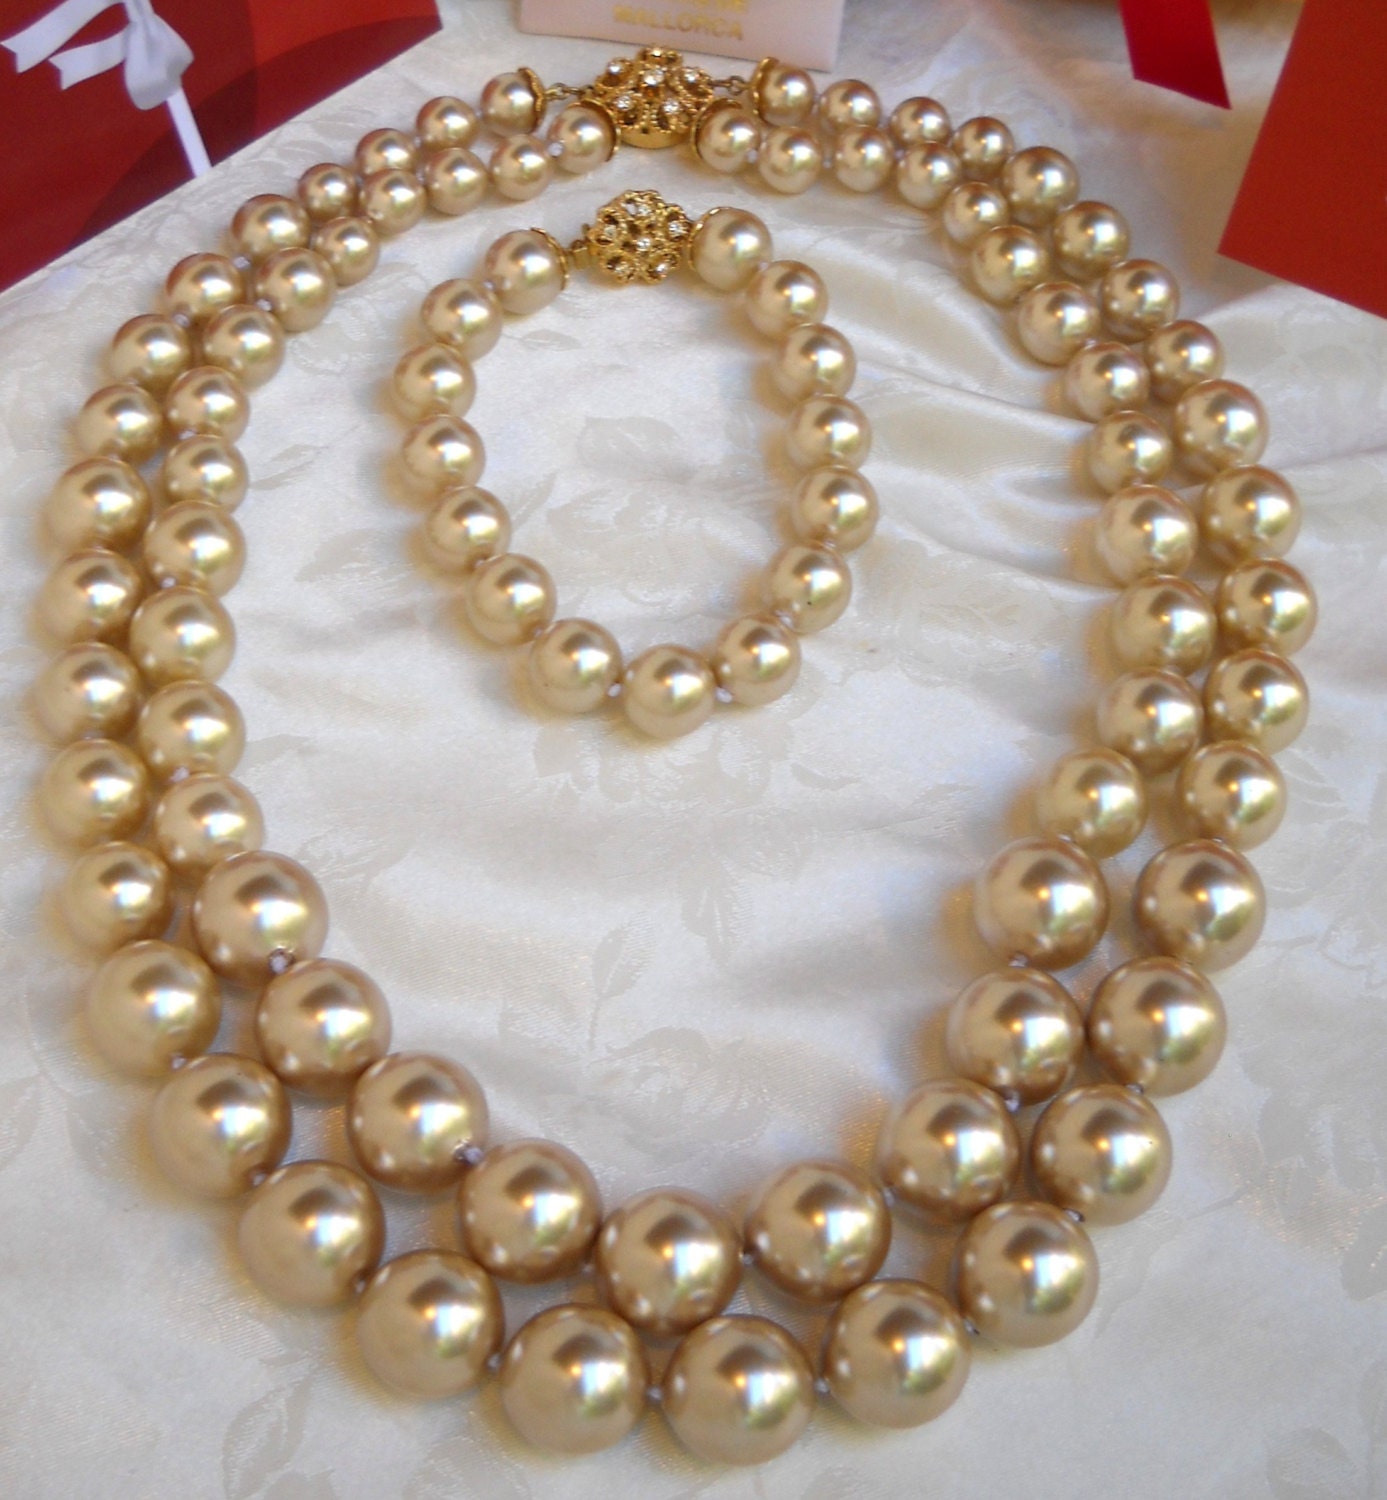 Majorca/Mallorca pearl necklace double graduated strands